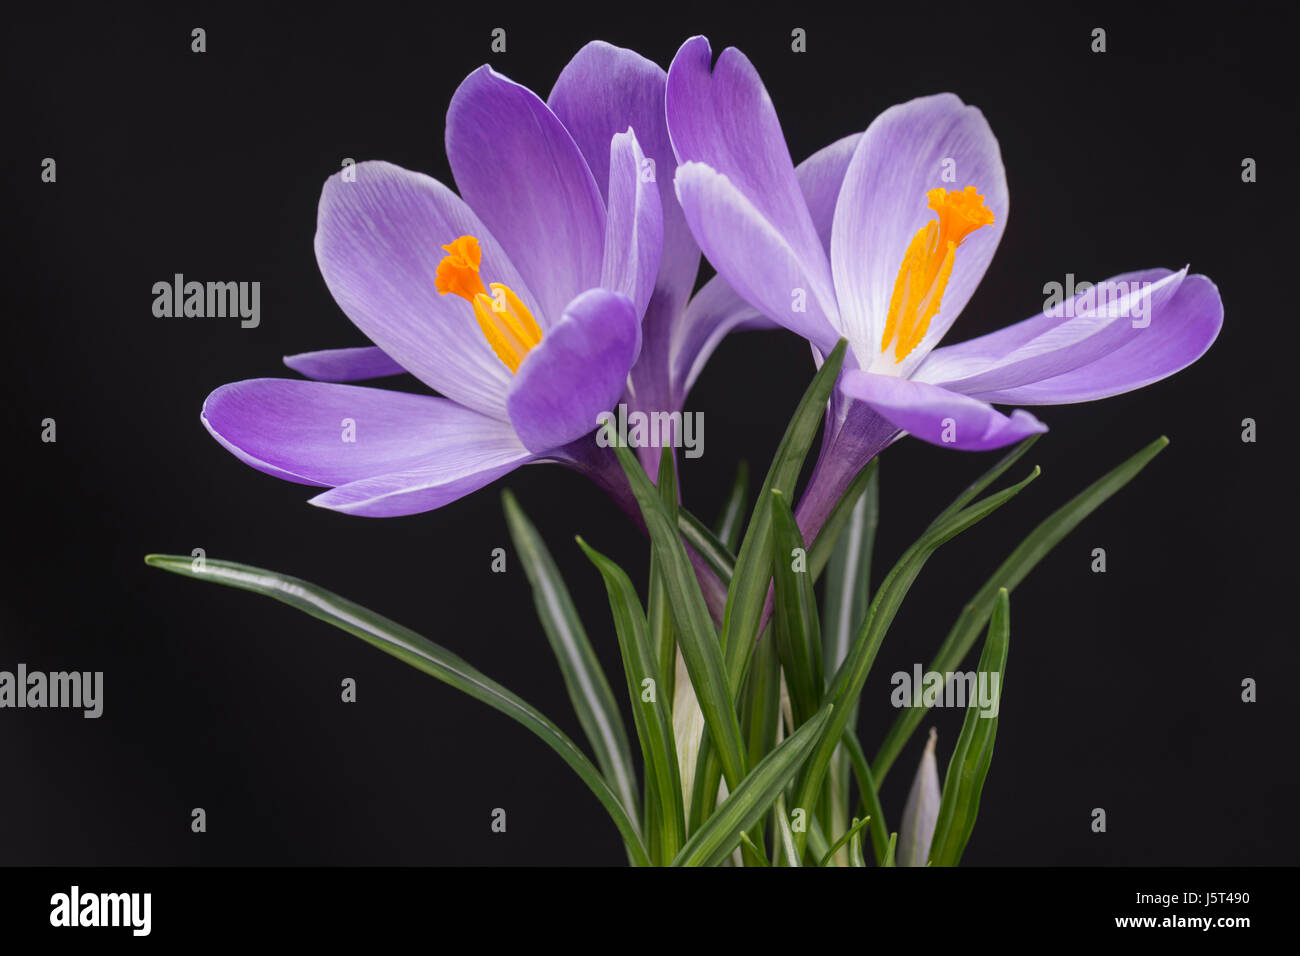 Crocus, Early crocus, Crocus tommasinianus, Studio shot of purple flowers  showing orange  stamens. Stock Photo